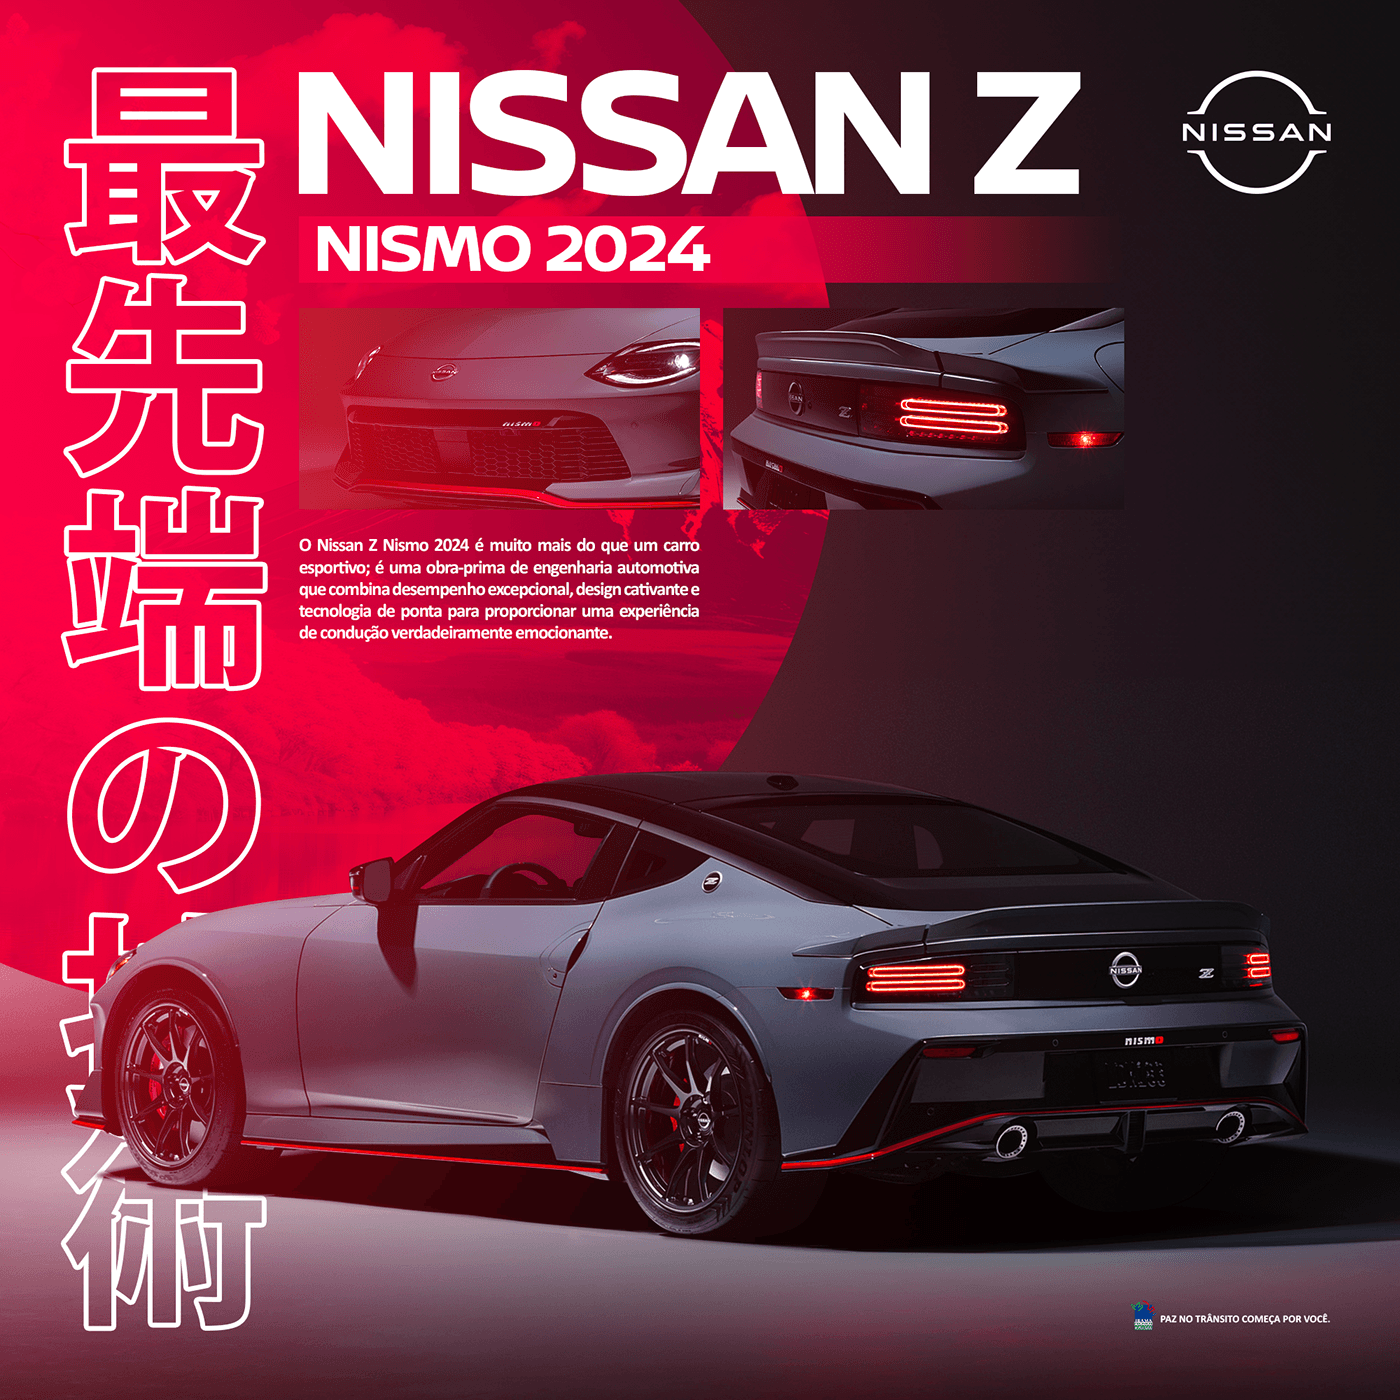 Nissan Z Nismo, instagram nissan, social media nissan, concessionária nissan